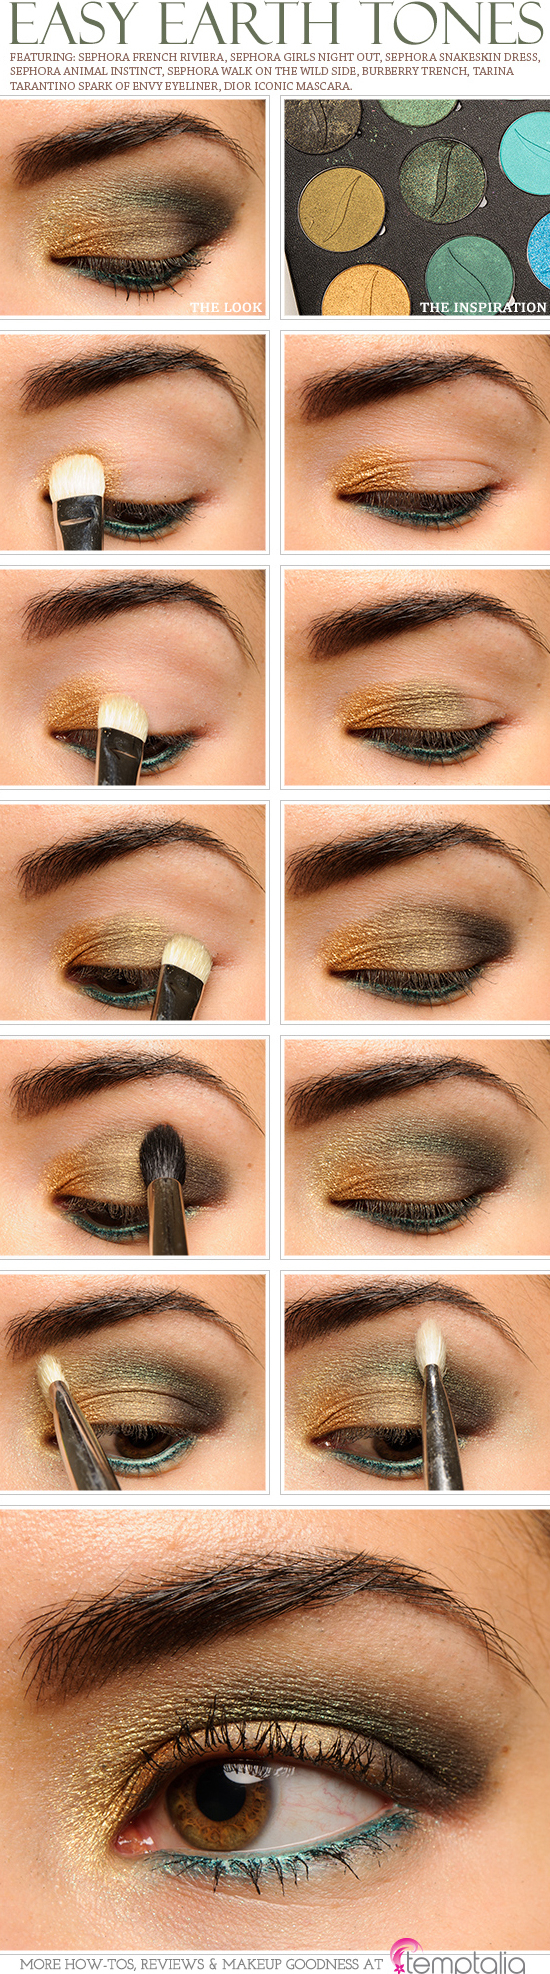 Eye Makeup With Grey Dress Sephora Snakeskin Dress 02 Eyeshadow Review Photos Swatches